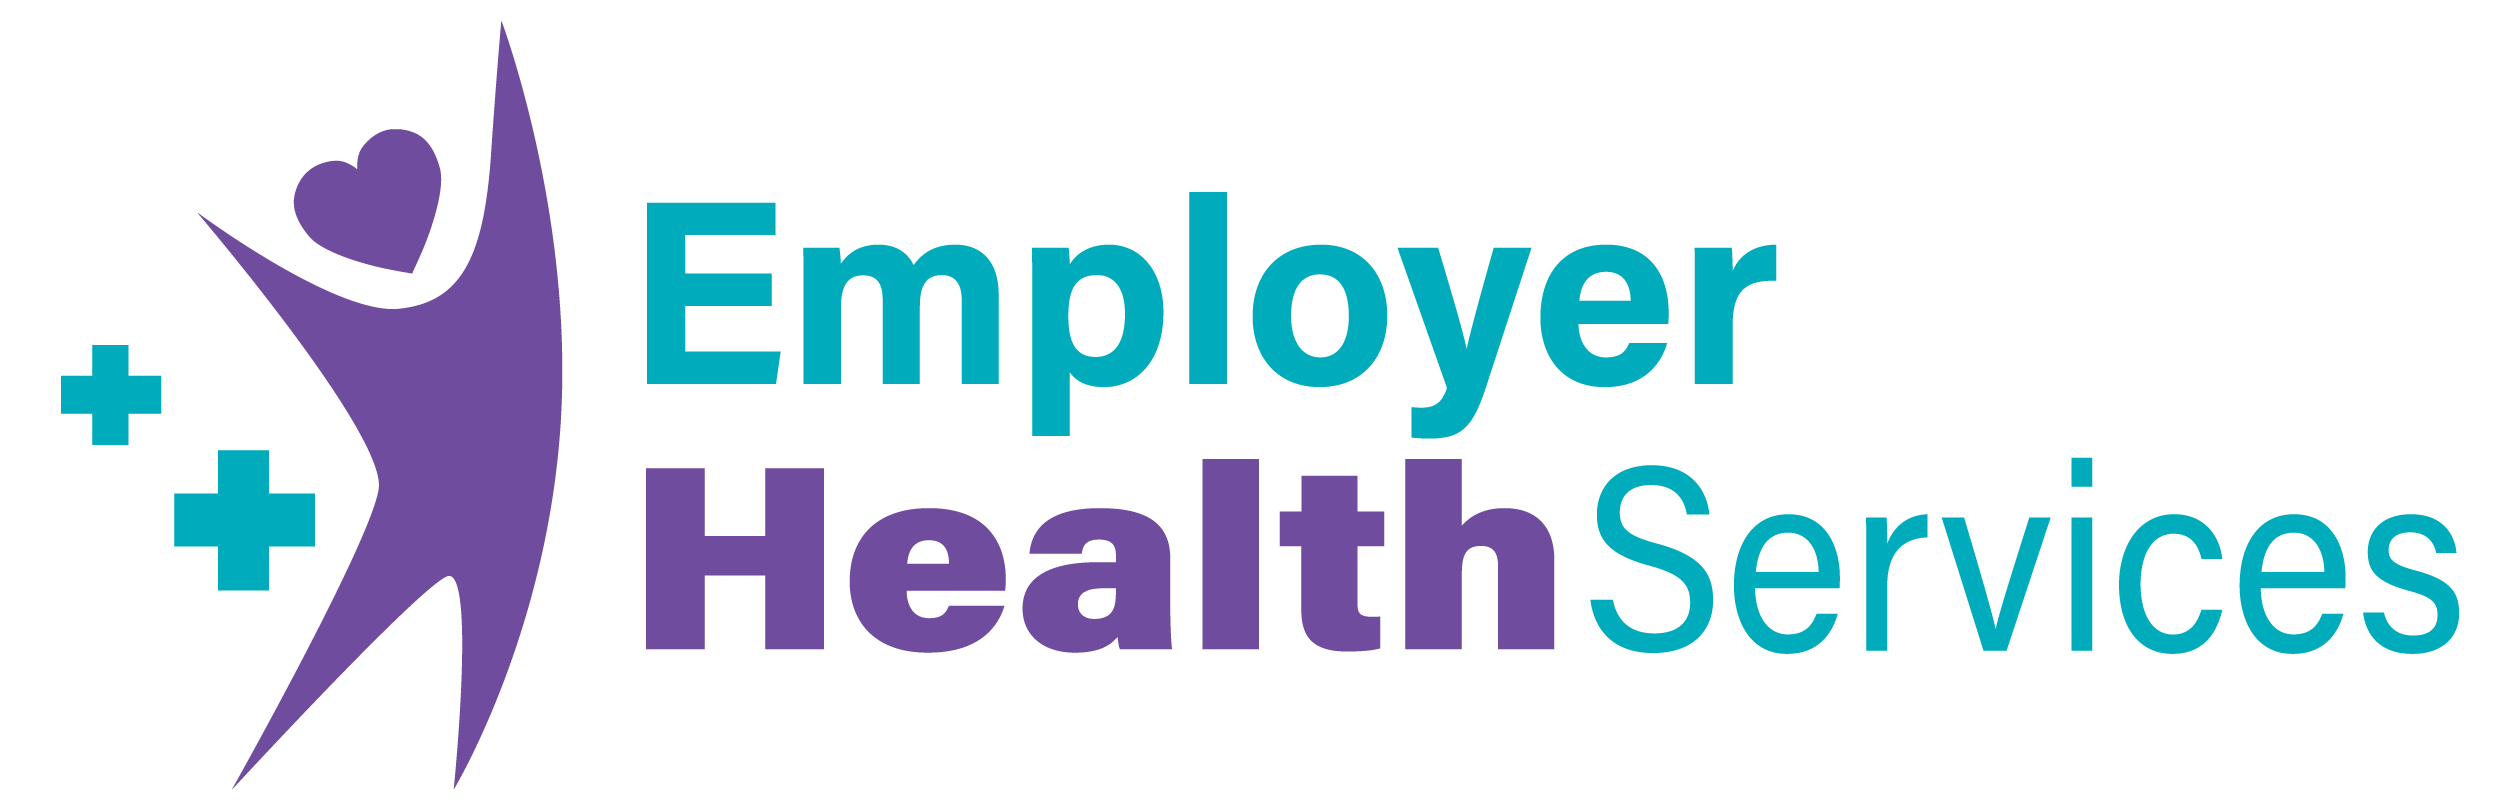 employer health services logo 